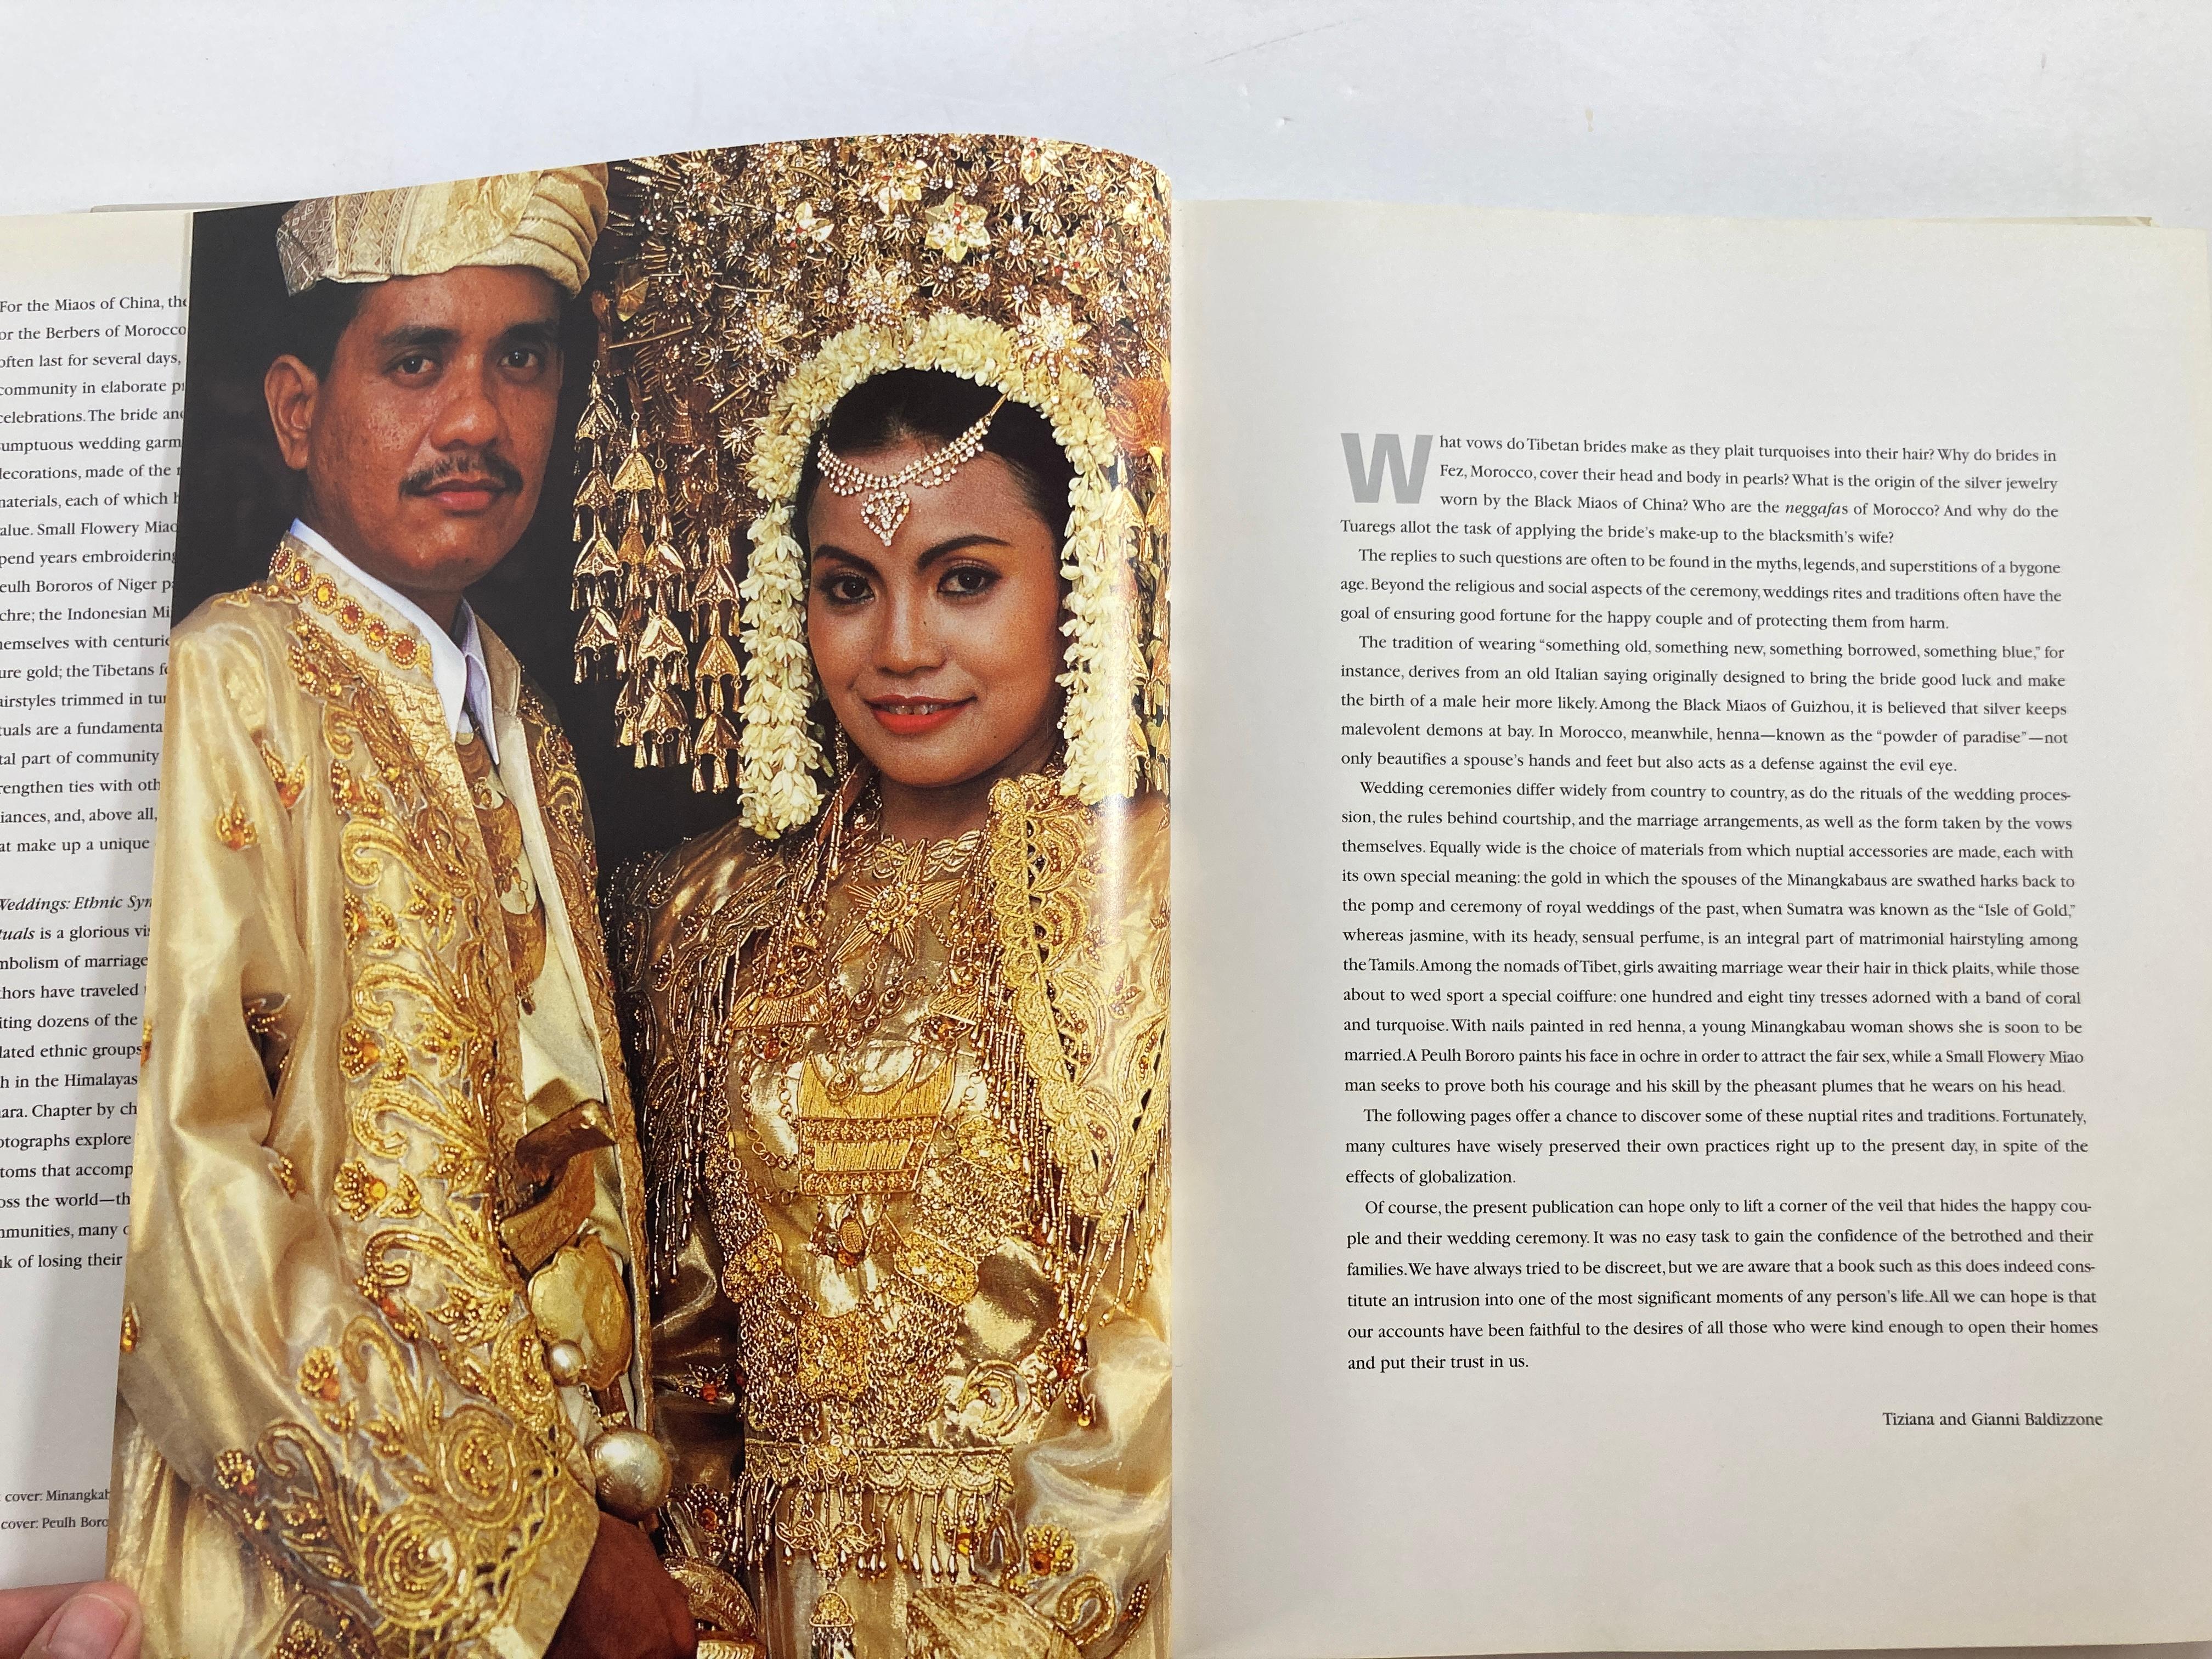 20th Century Wedding Ceremonies Ethnic Symbols, Costume and Rituals by Gianni Baldezzoni